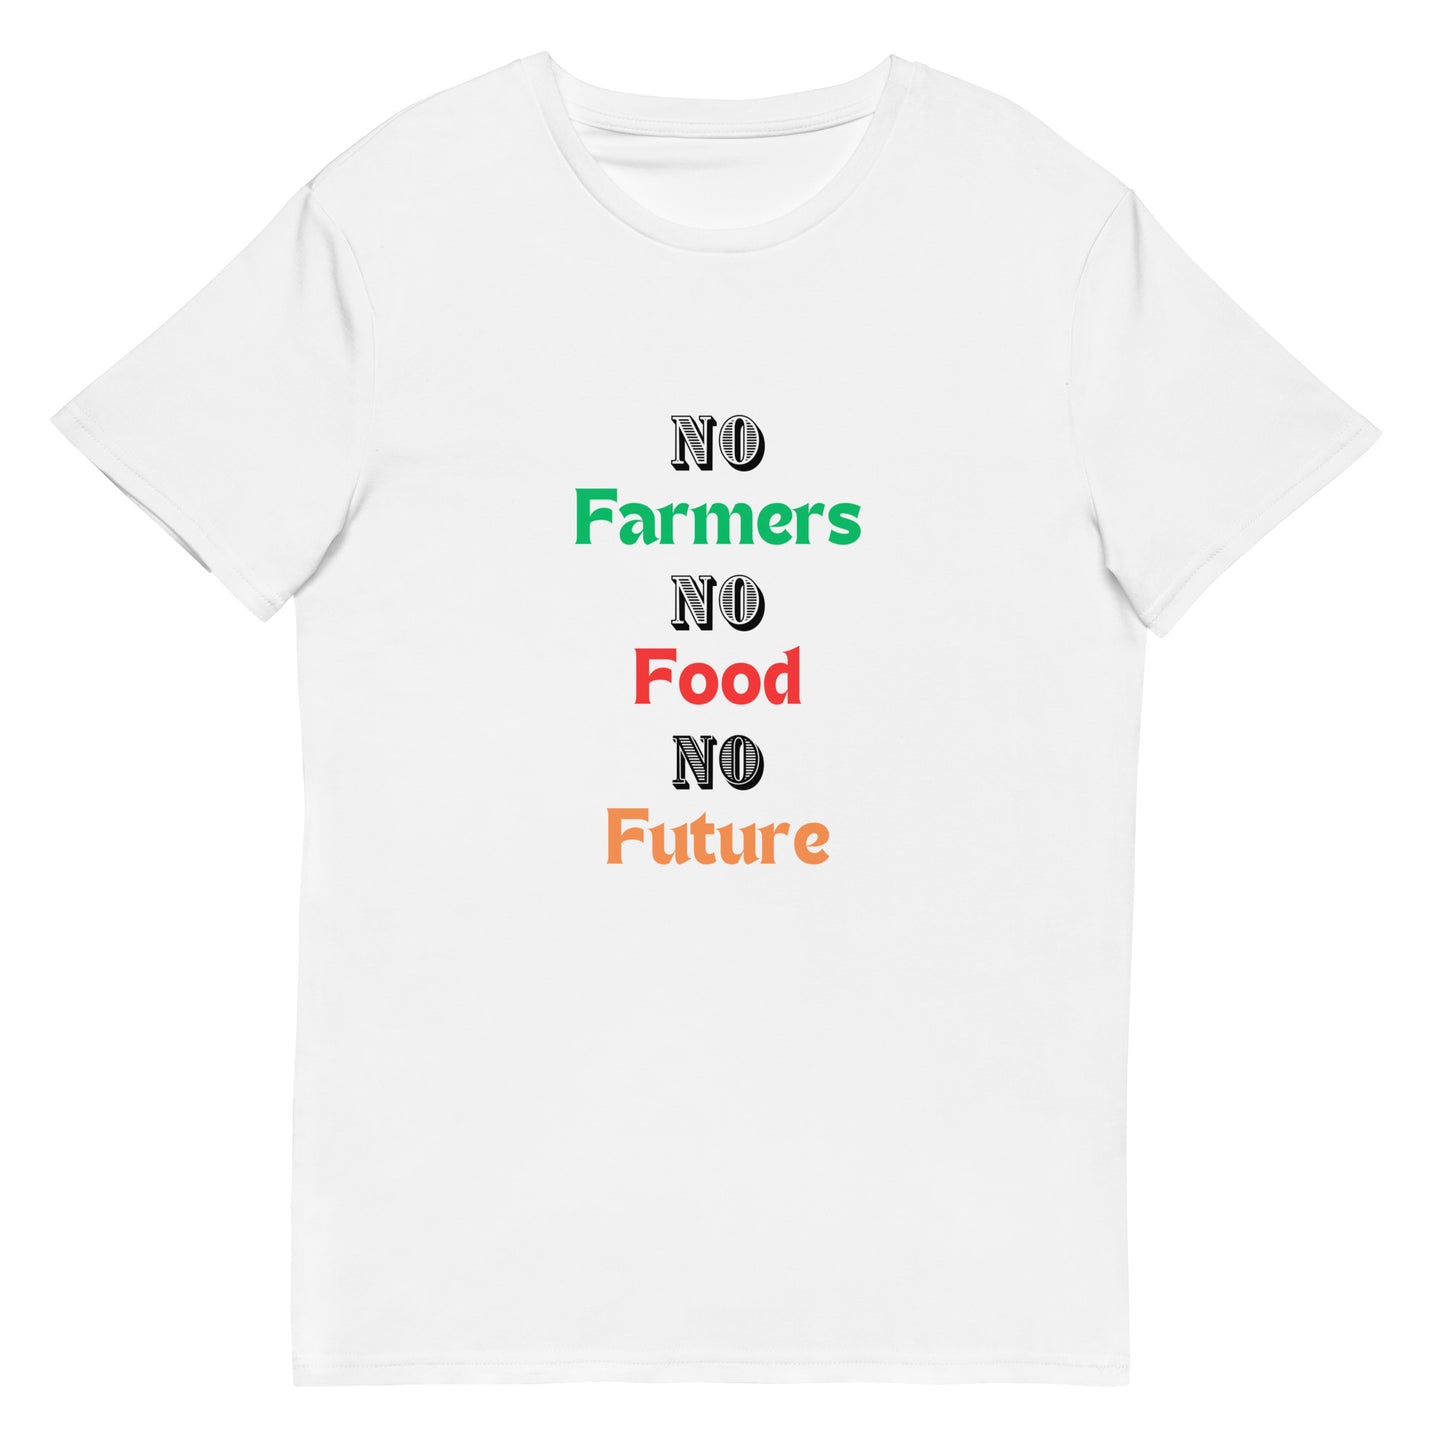 0-A-00 No Farmers NO Food No Future  premium cotton t-shirt